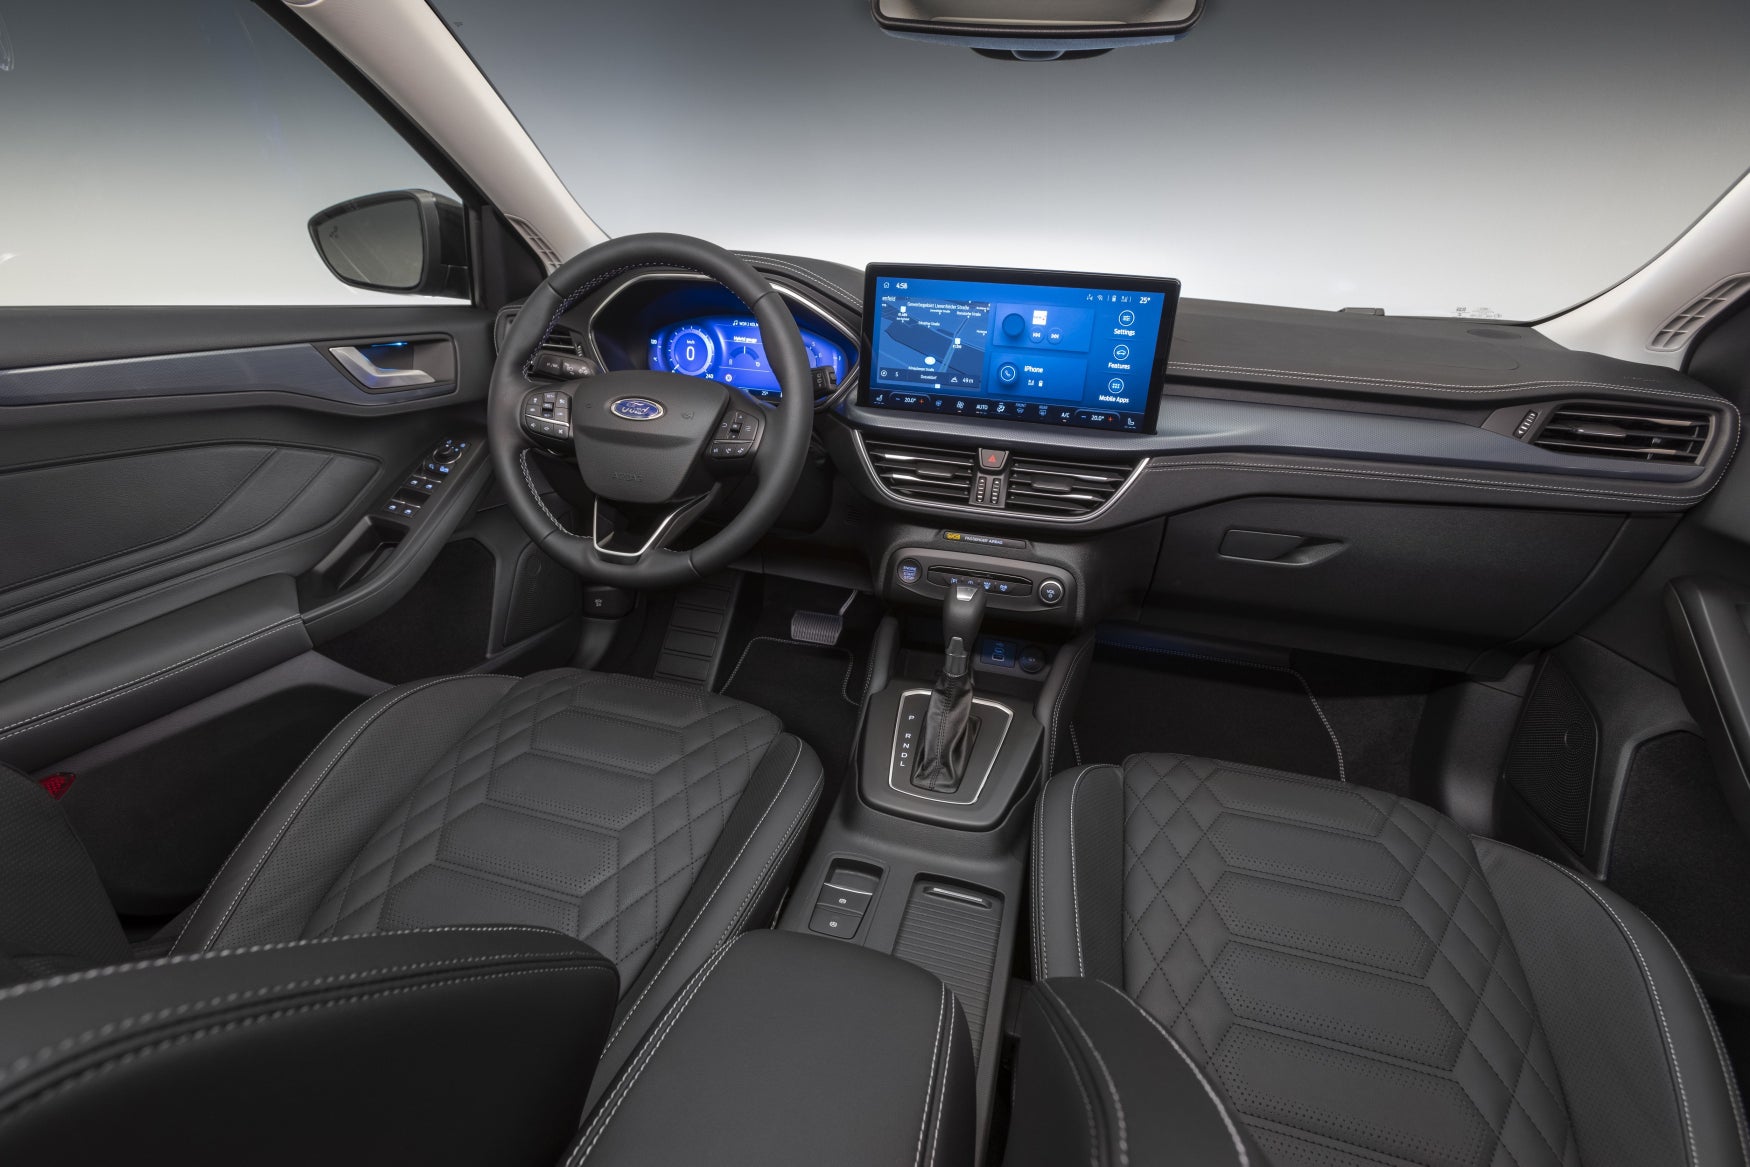 New 2022 Ford Focus interior cabin